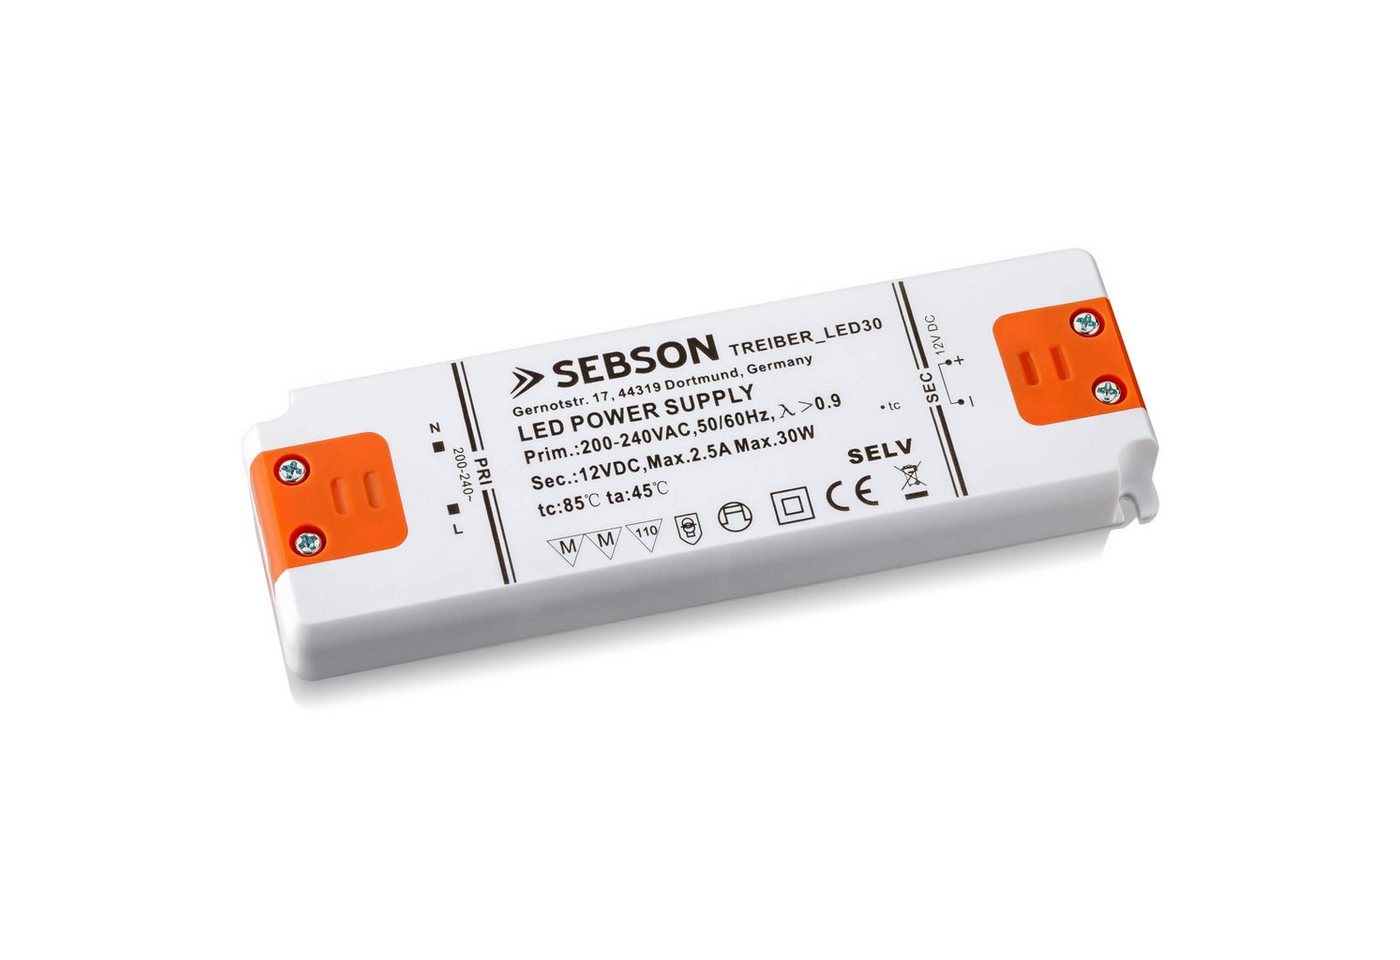 SEBSON 30W LED Treiber / LED Trafo - 12V Ausgangsspannung, Netzteil für LED Trafo von SEBSON